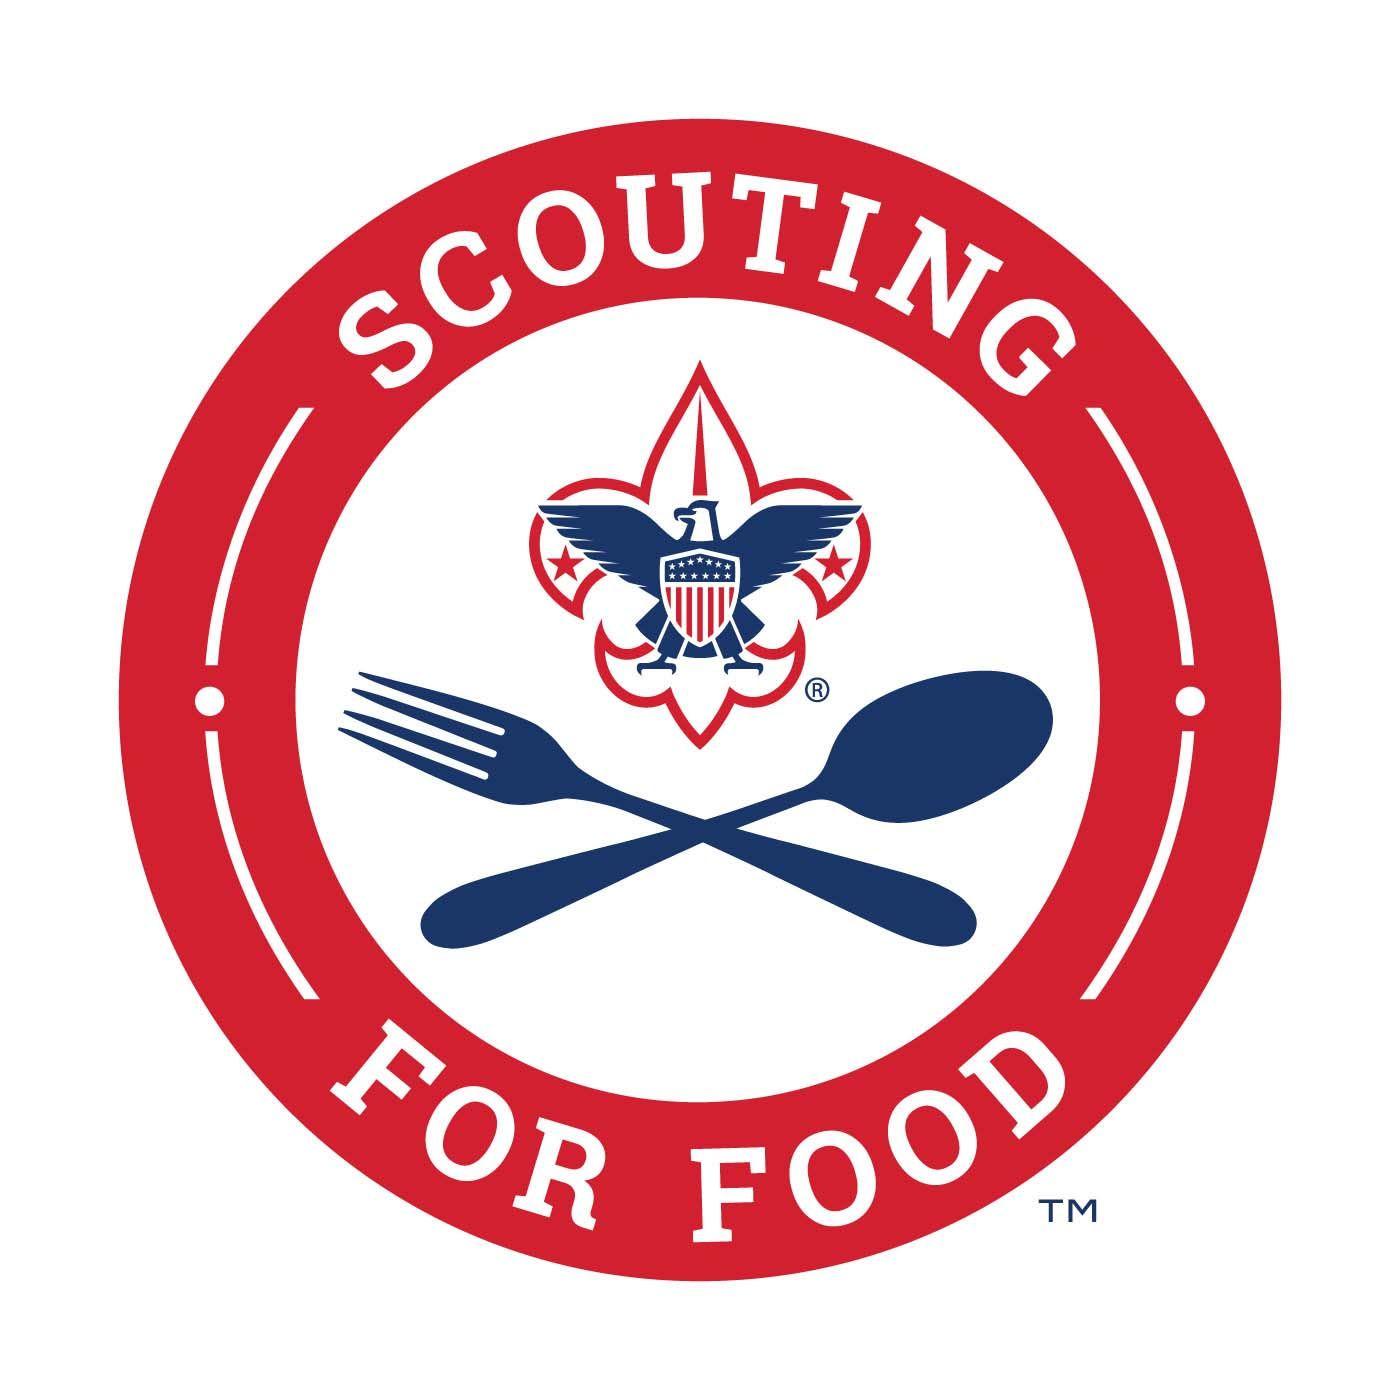 Red Circle Food Logo - Scouting-For-Food-Logo – Simon Kenton Council Boy Scouts of America